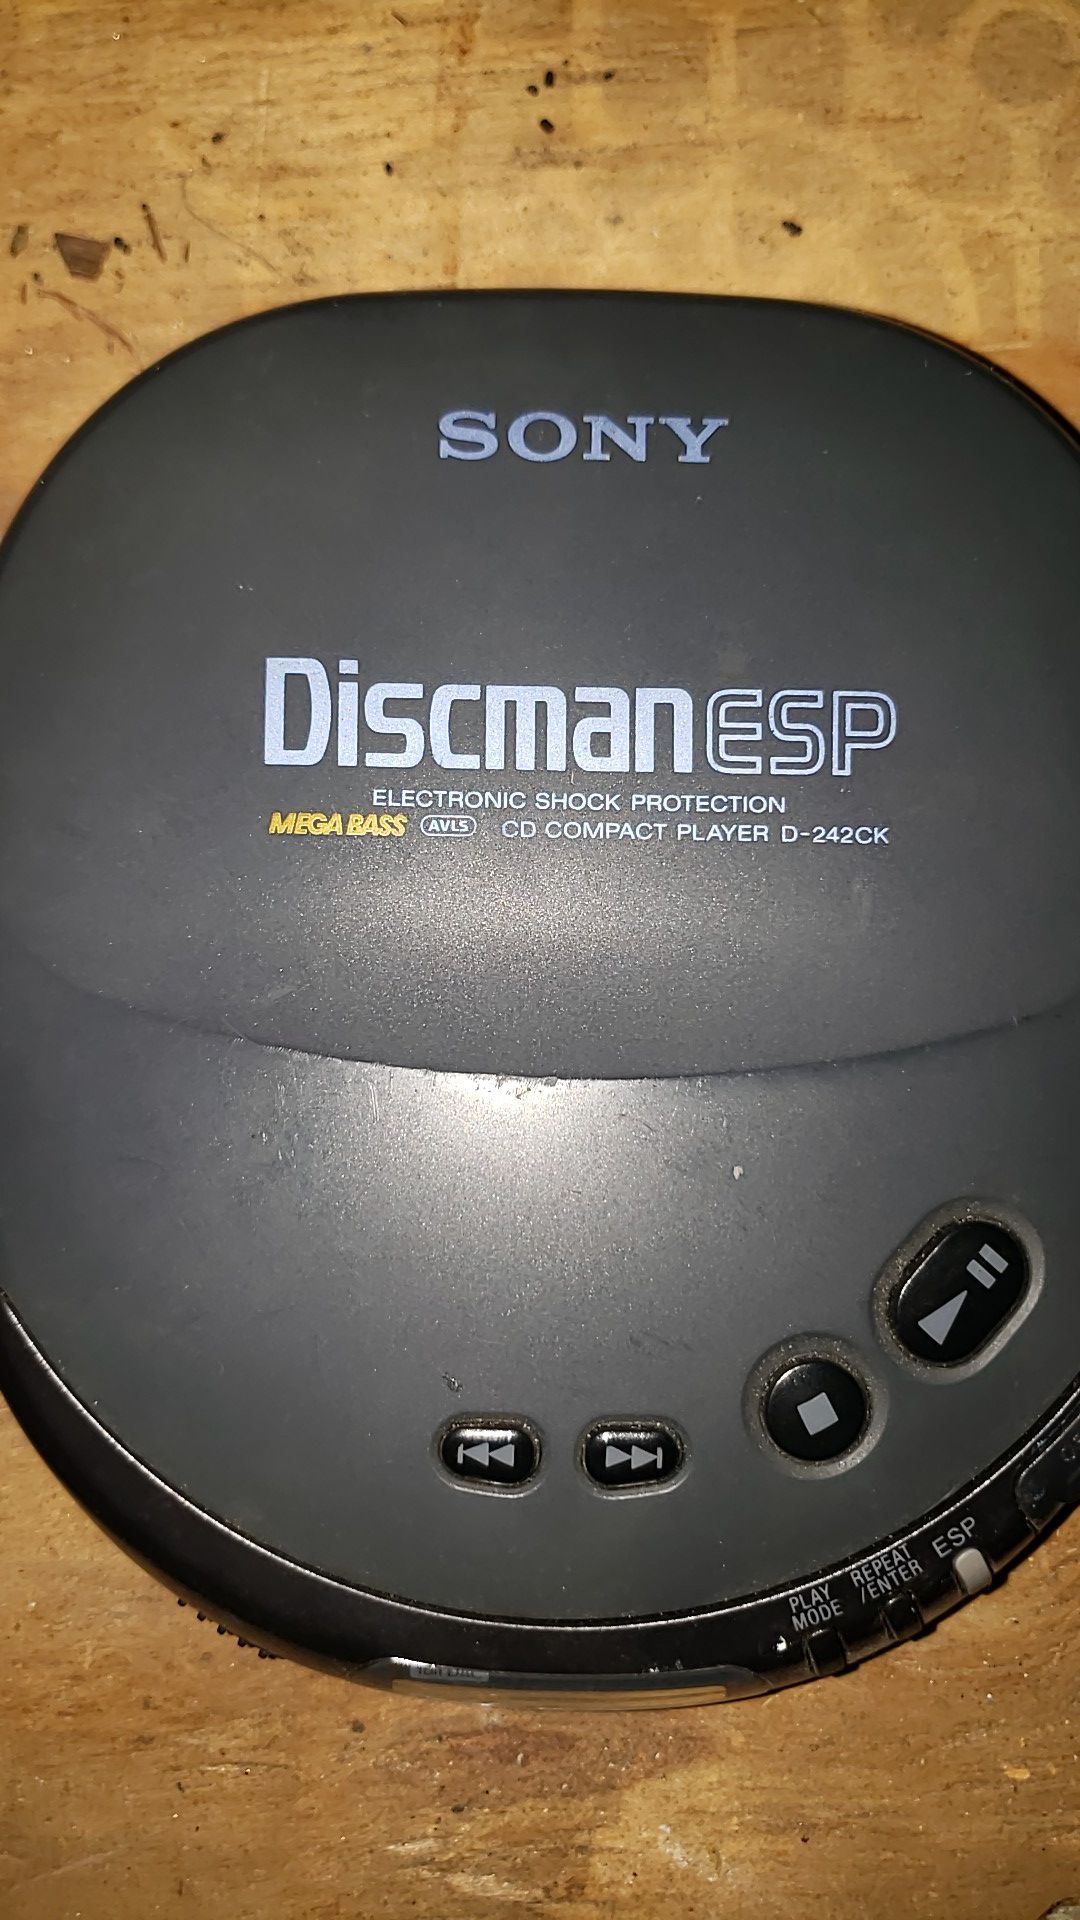 Sony Discman CD player Walkman used but working, no headphones